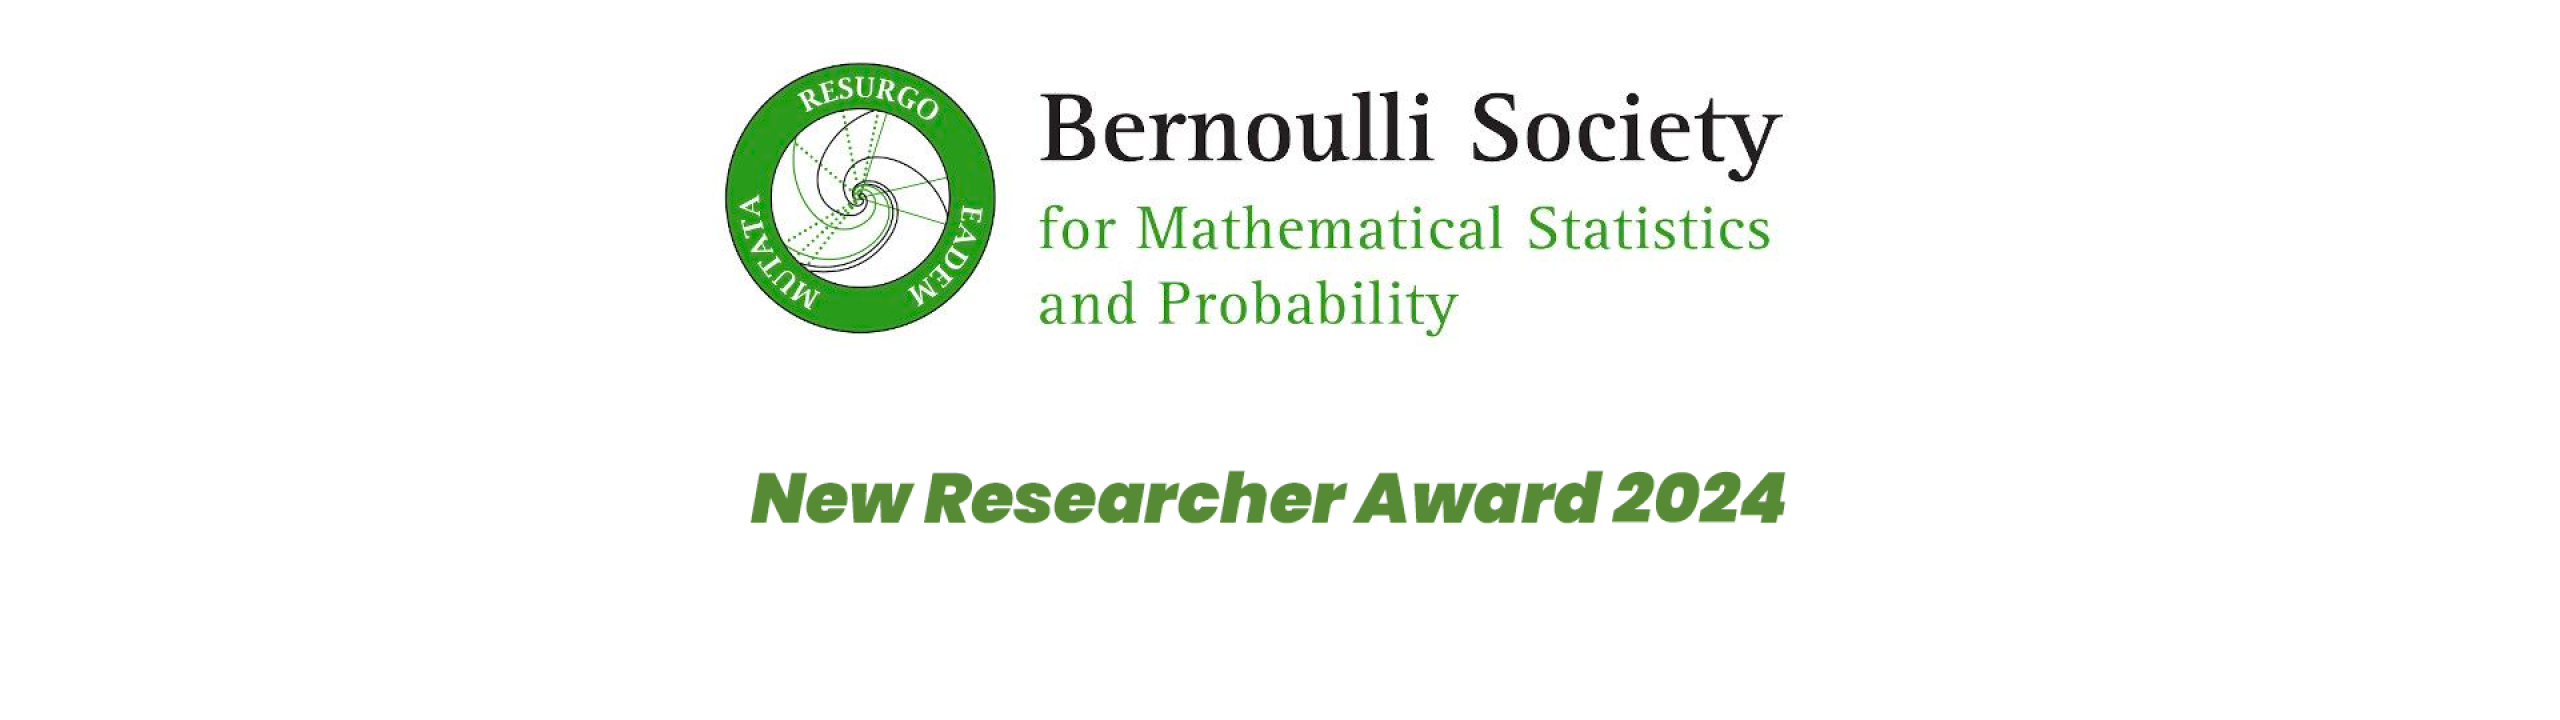 bs-new-researcher-award-24